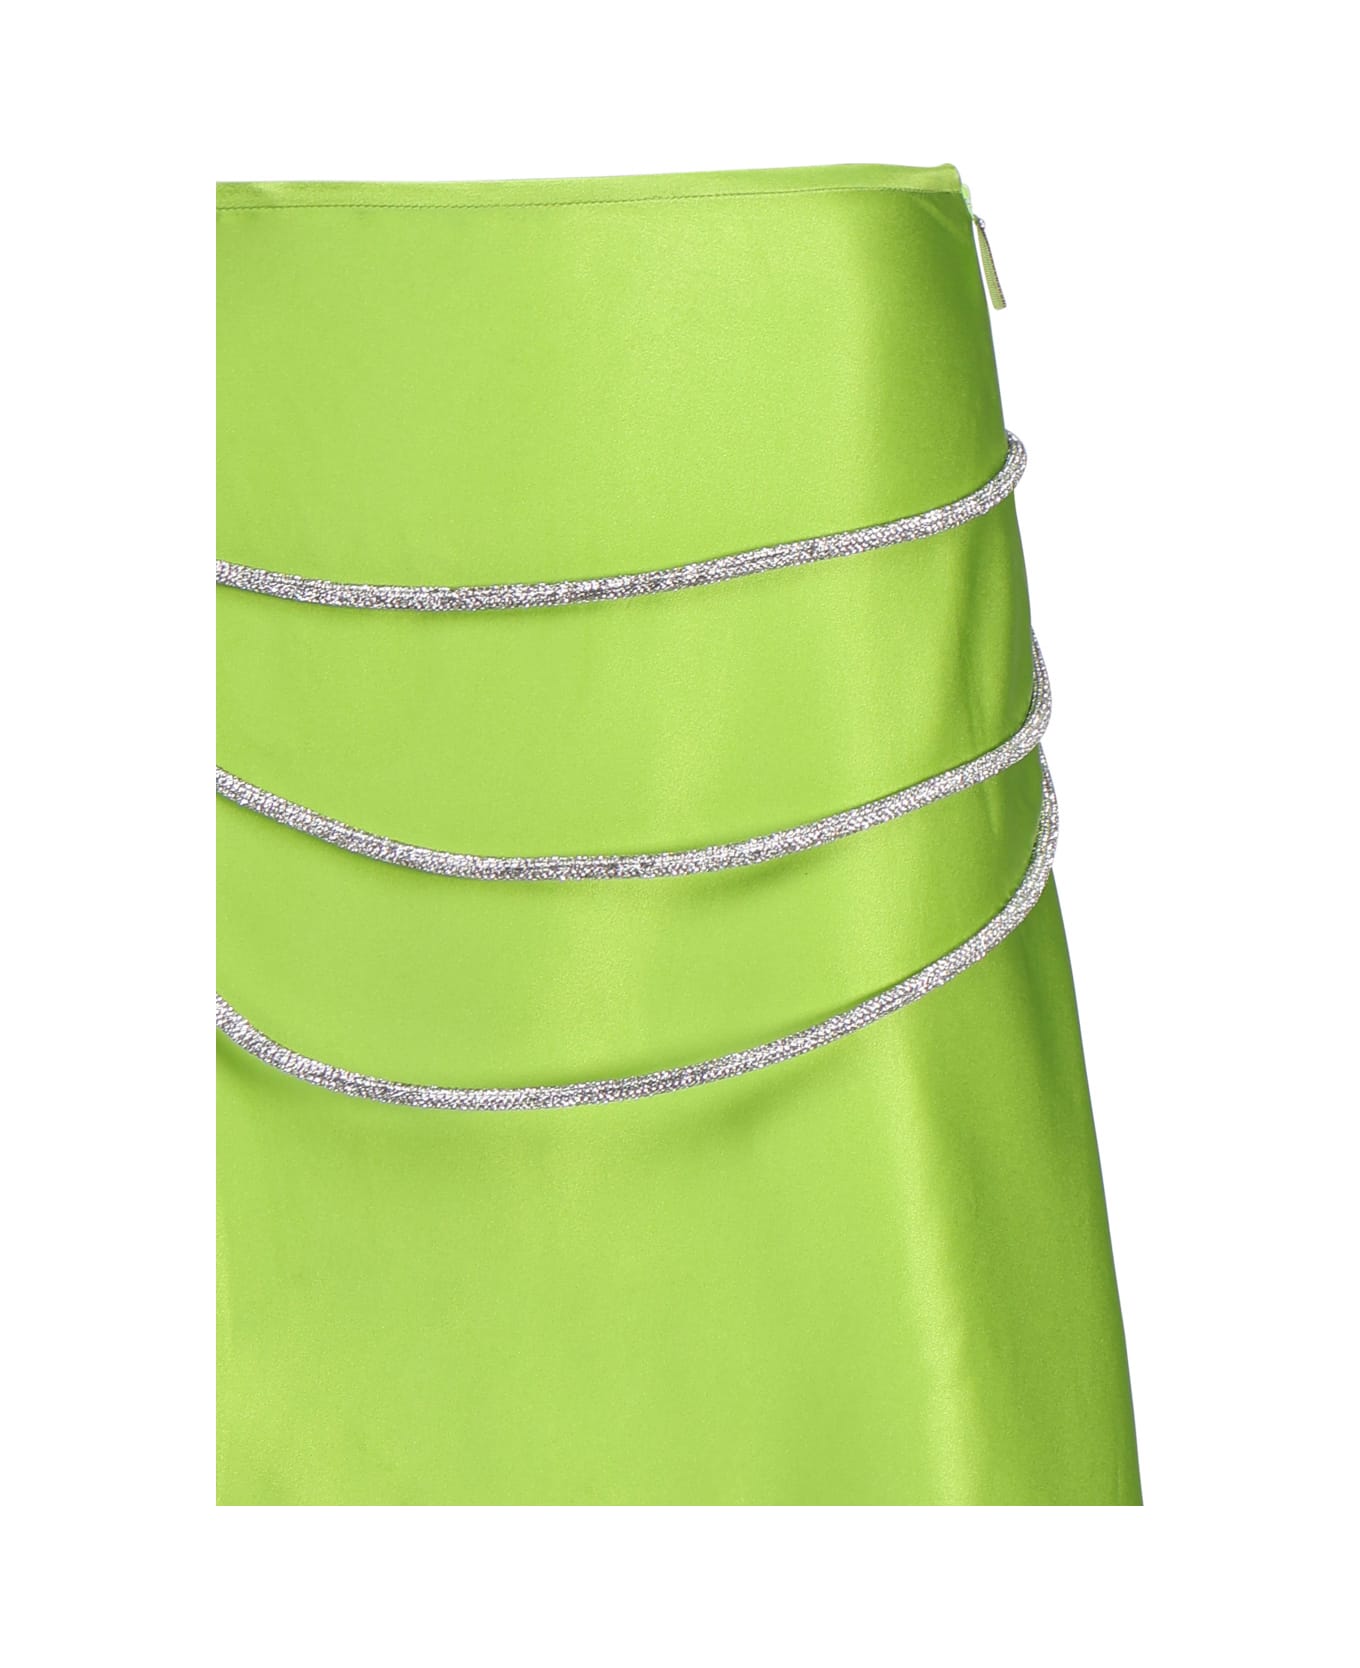 Nué Laetitia Skirt - Lime green